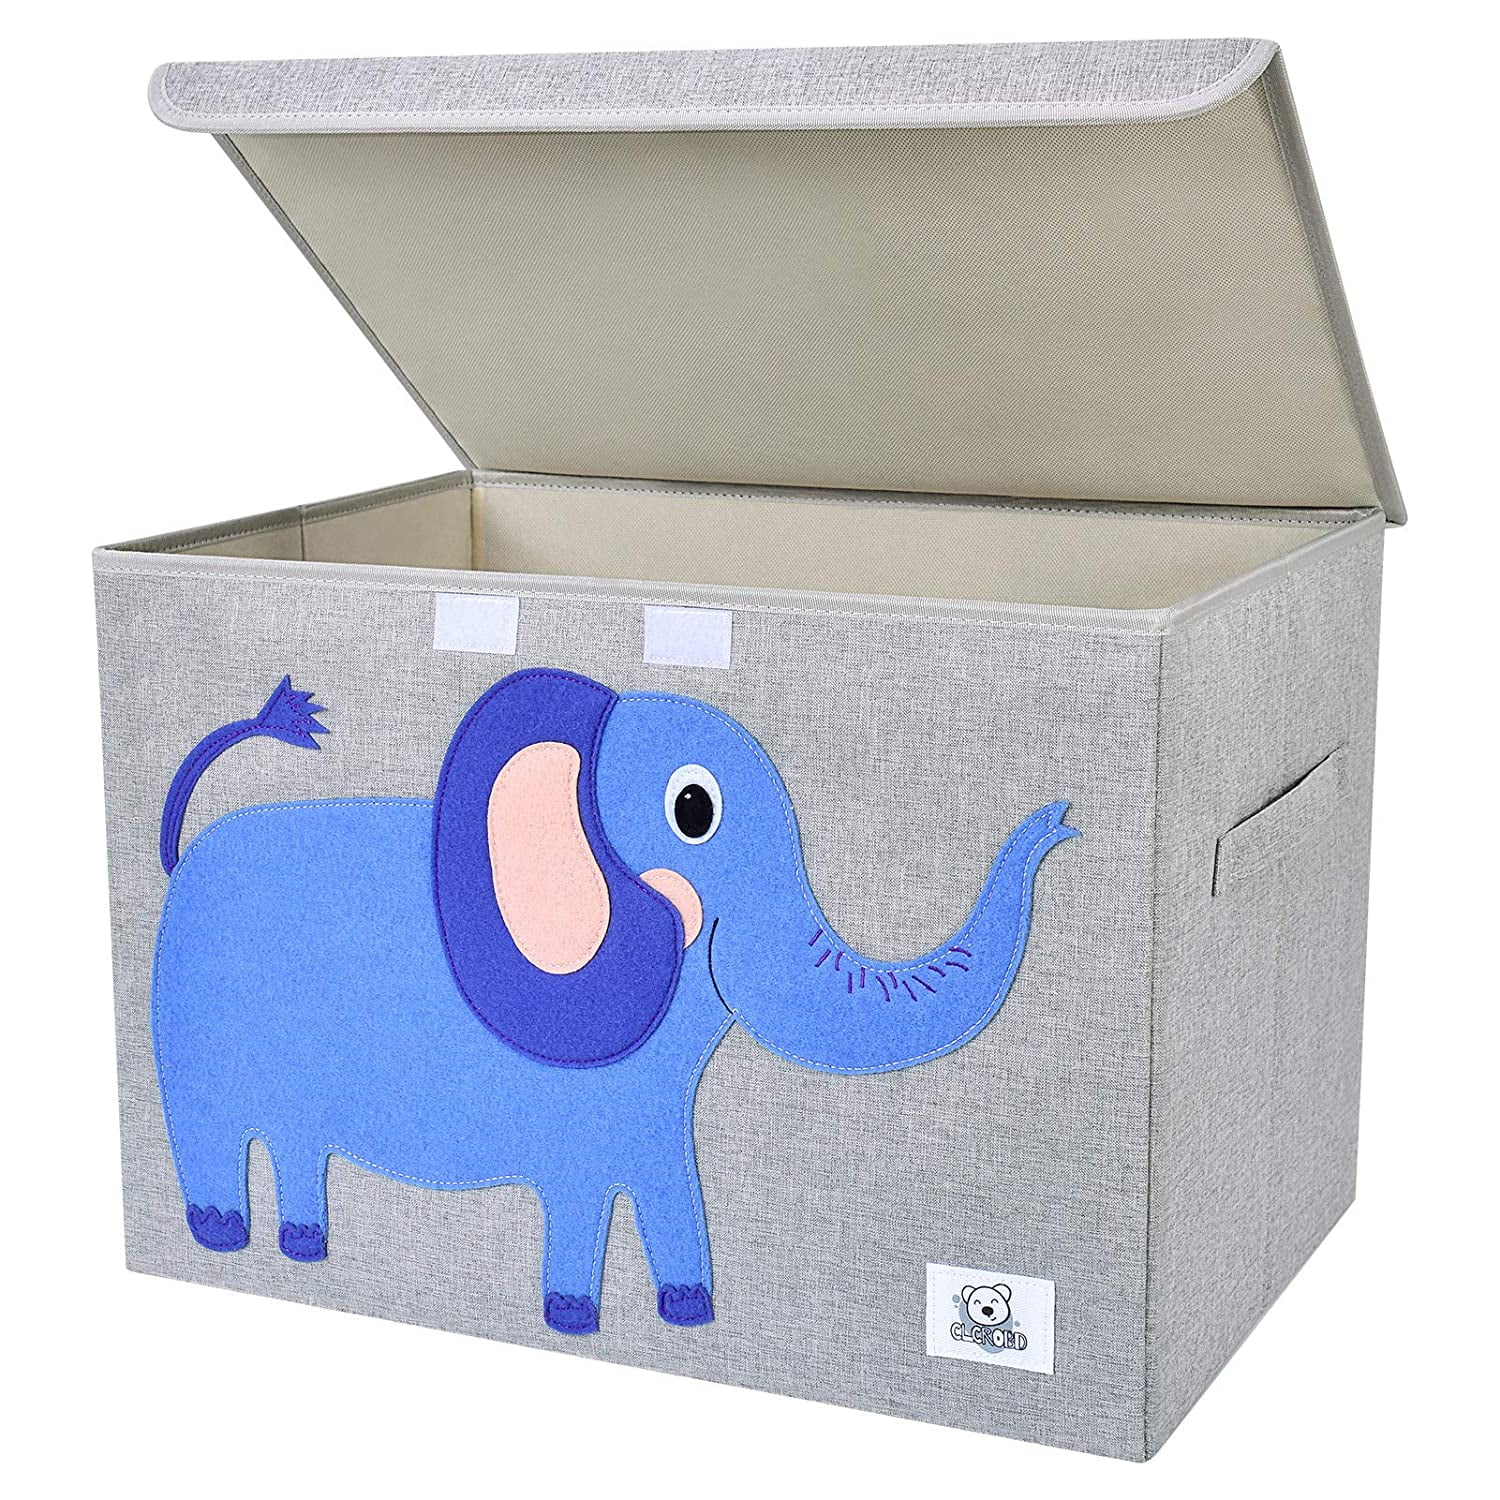 Details about   Elephants Storage Toy Chest Blue Gray Nursery Kids Room Storage Box Boys New 